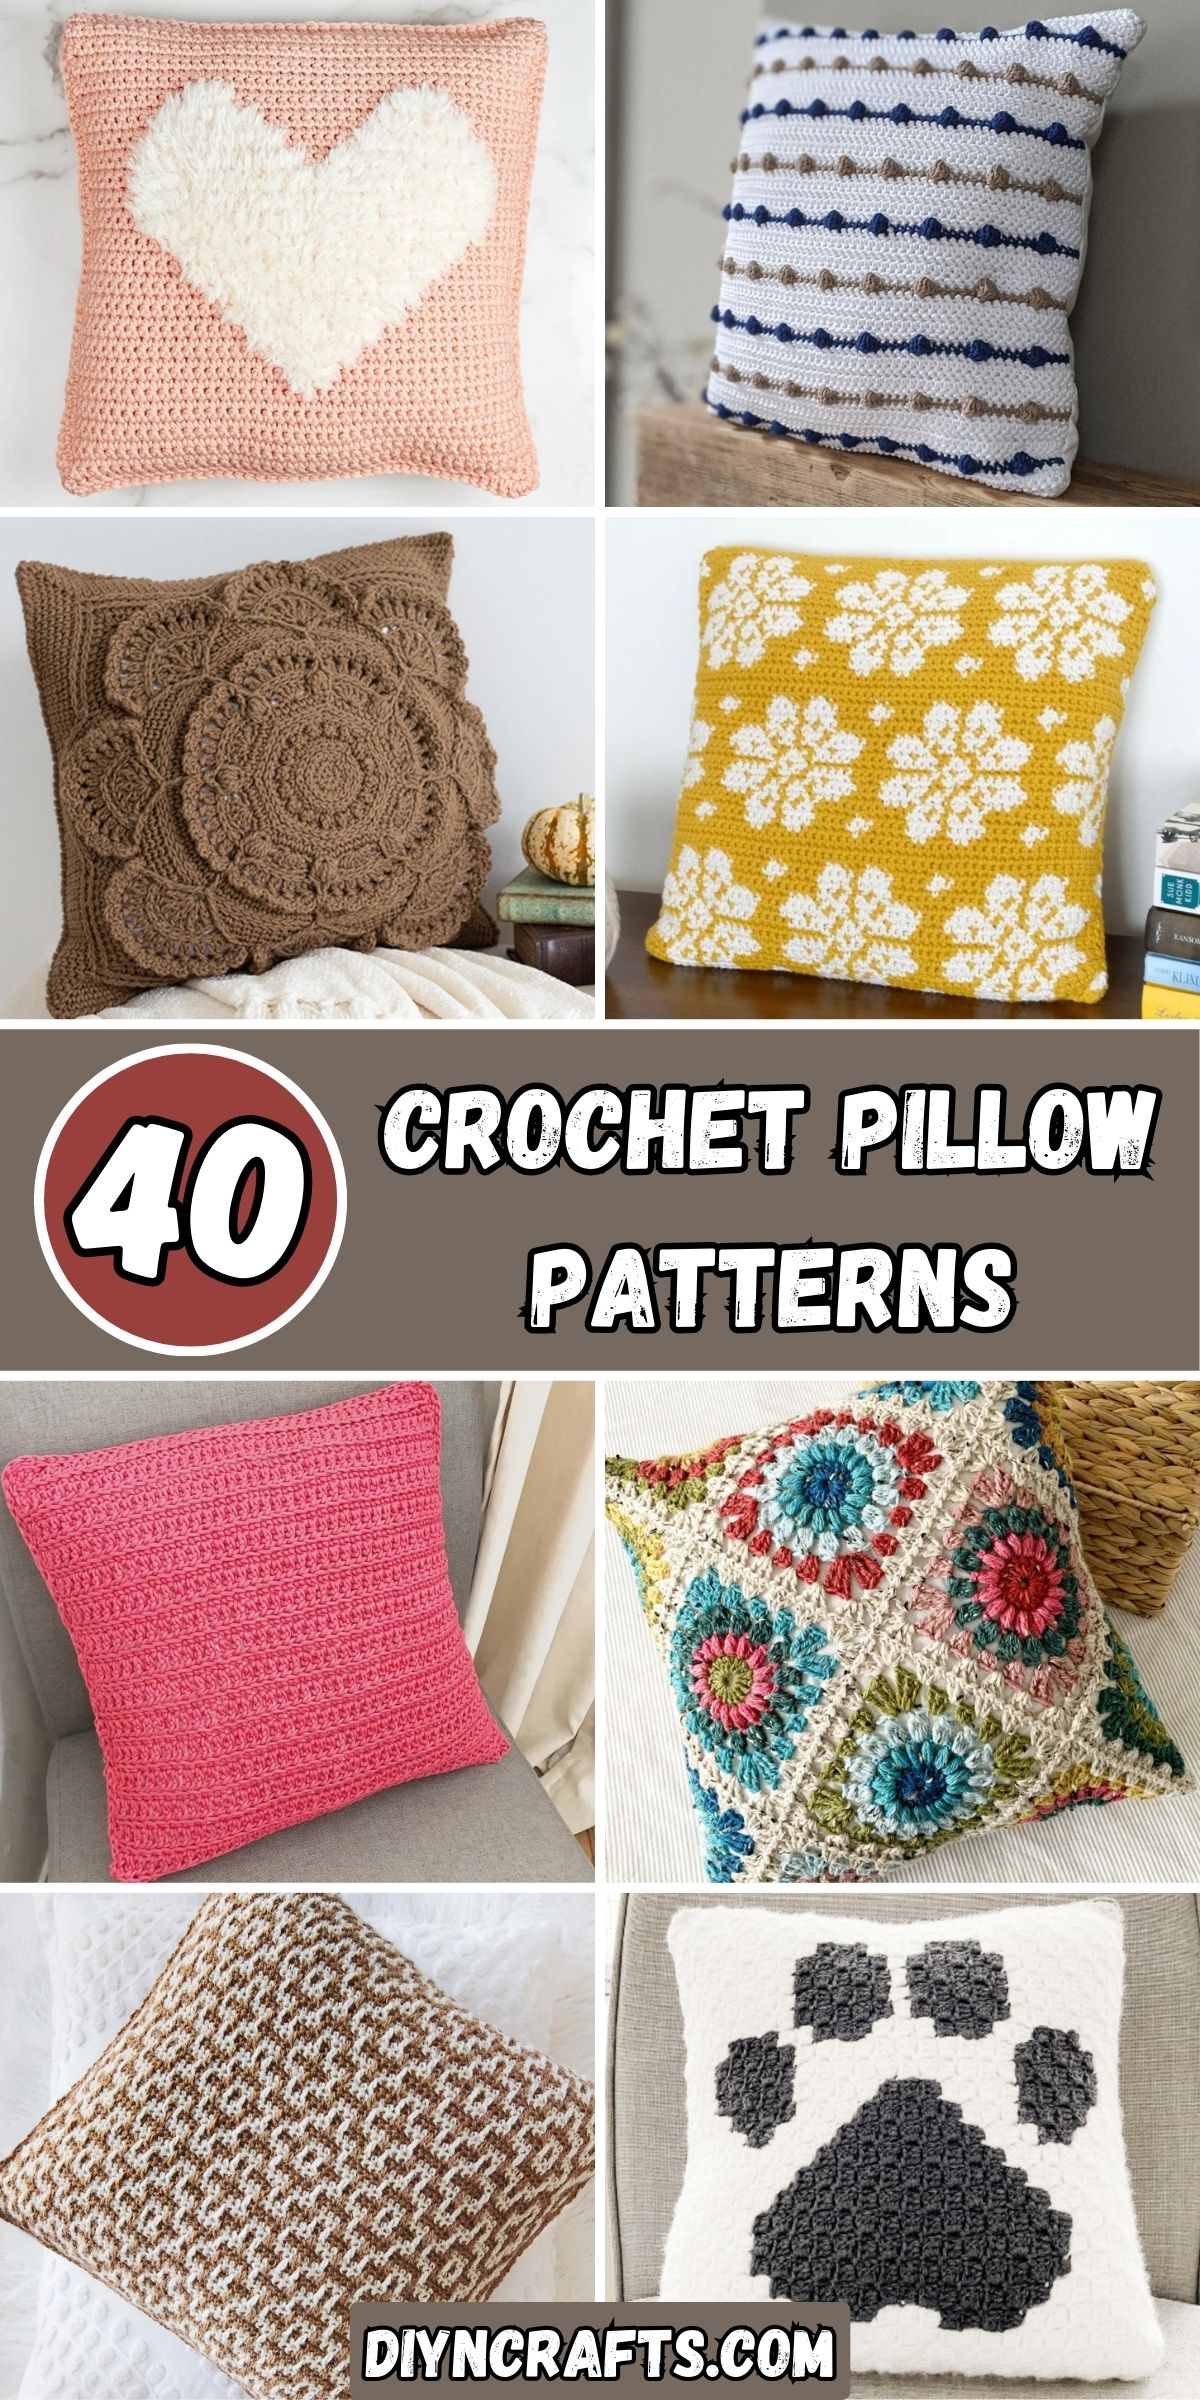 40 Crochet Pillow Patterns collage.